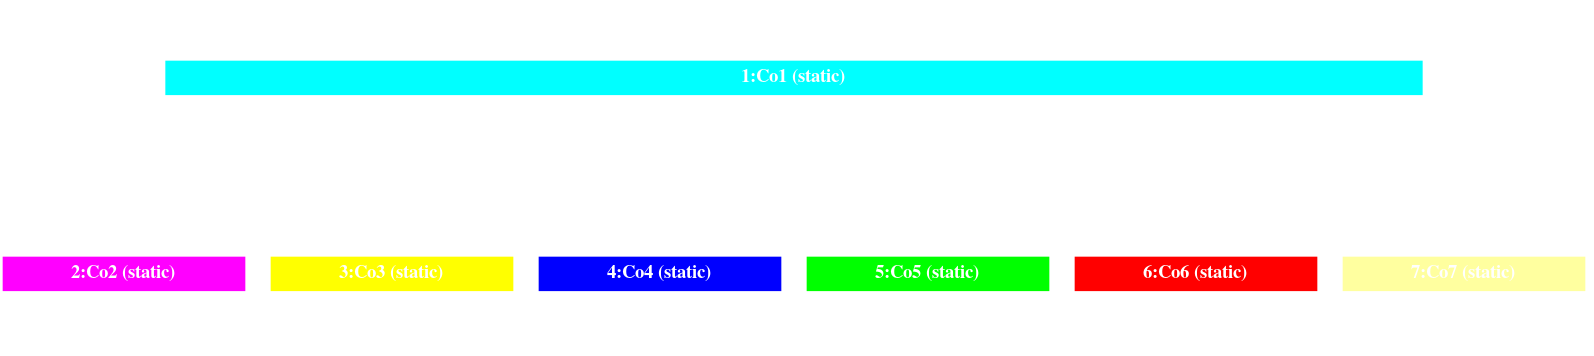 Pelton distributor model TCAE component graph